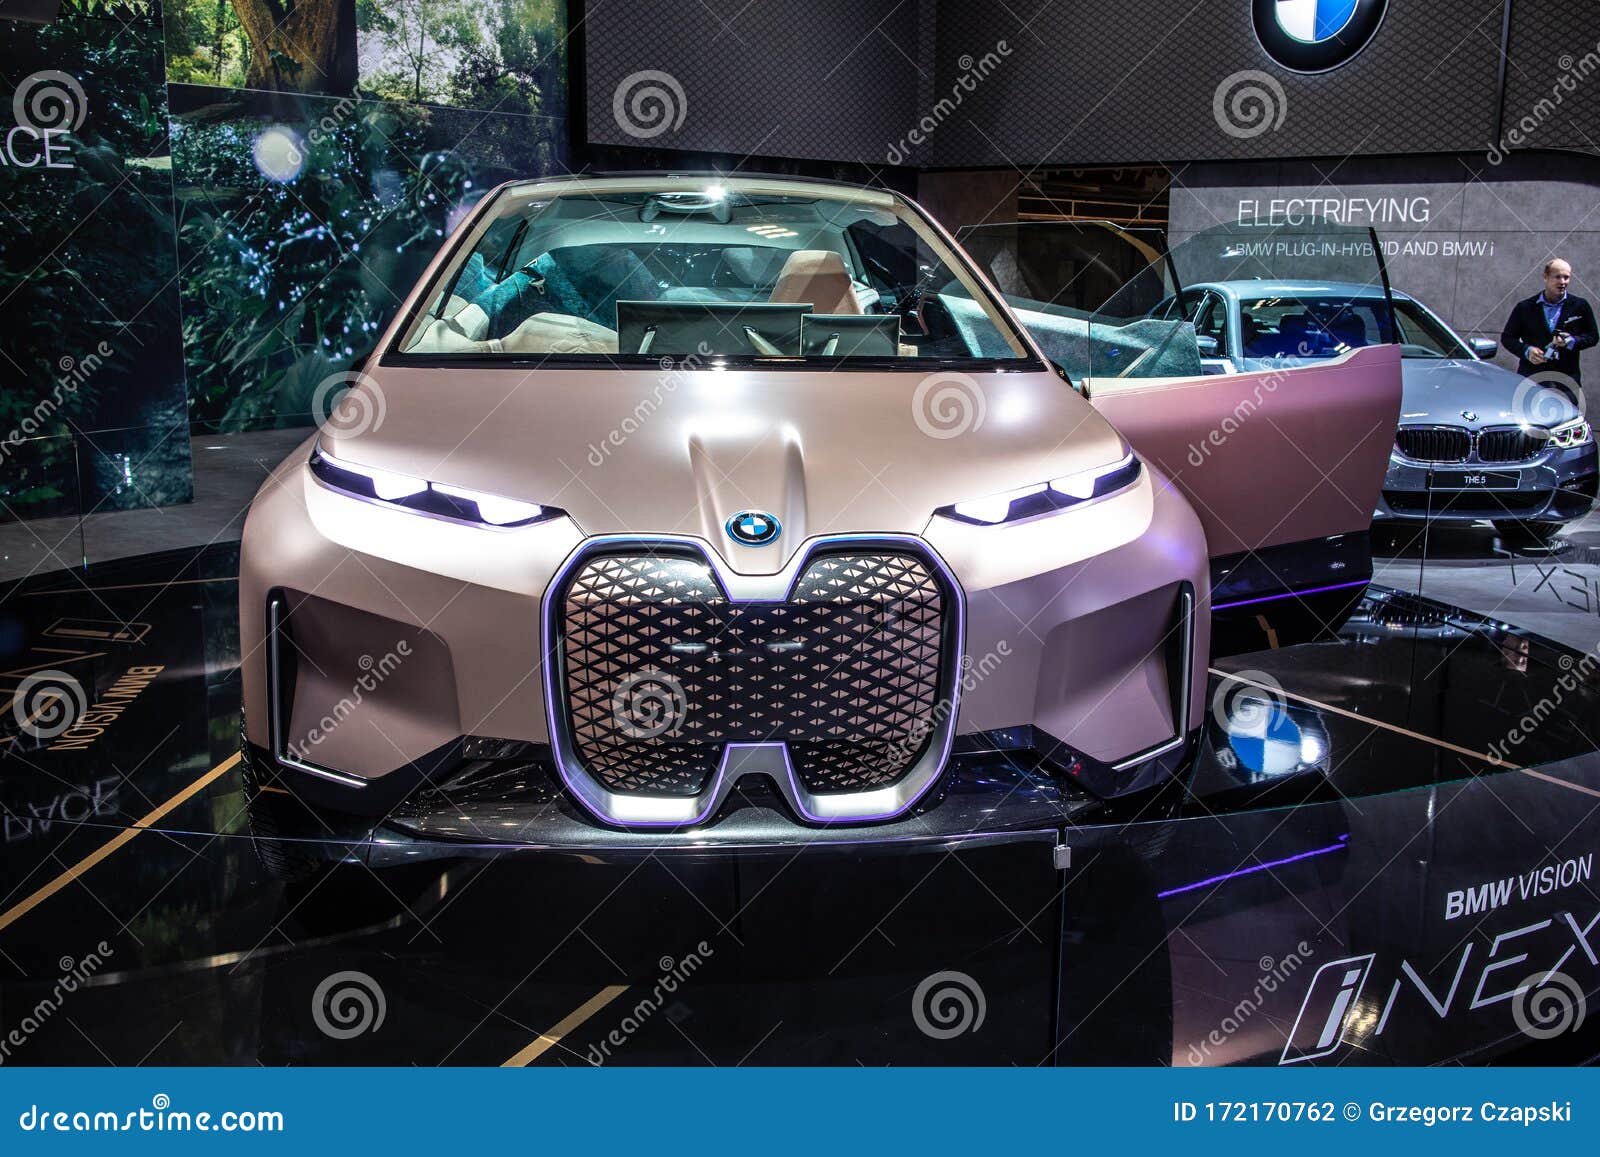 Bmw Vision Inext概念车原型车 布鲁塞尔汽车展 全电动 高度自主驾驶的环保未来宝马sav 图库摄影片 图片包括有显示 马达